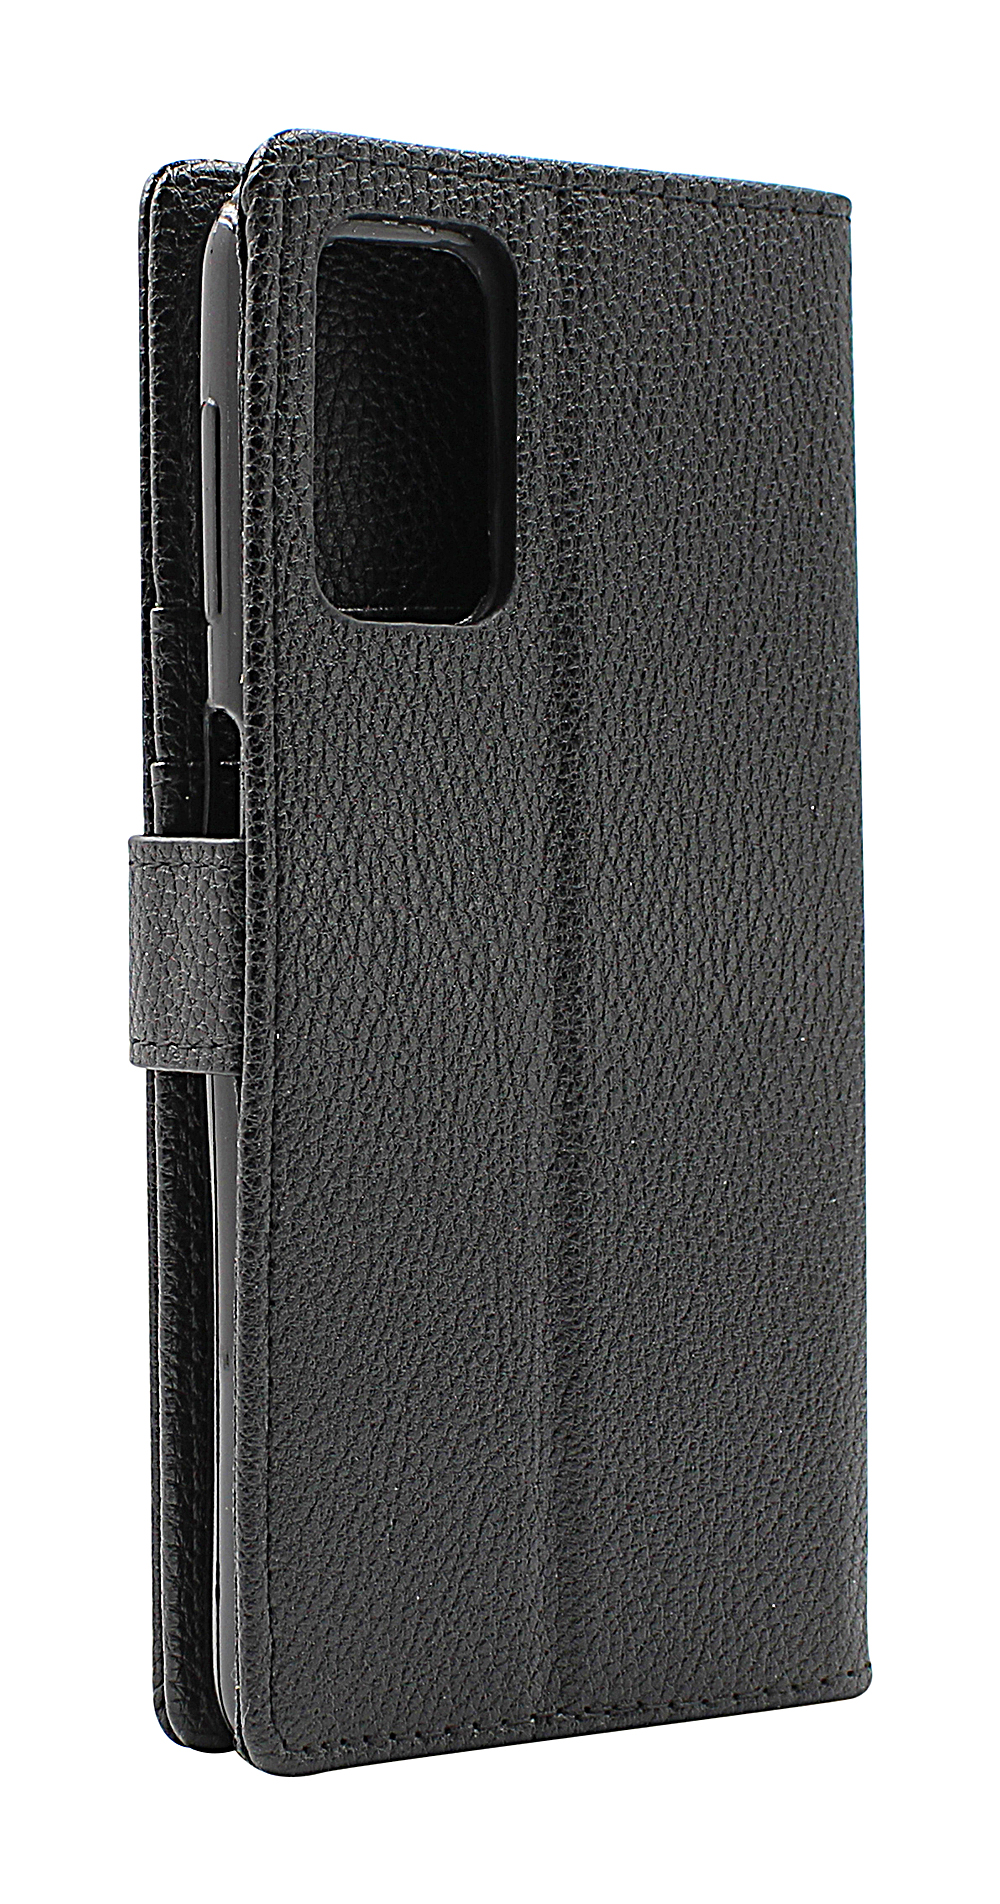 New Standcase Wallet Samsung Galaxy A32 5G (SM-A326B)